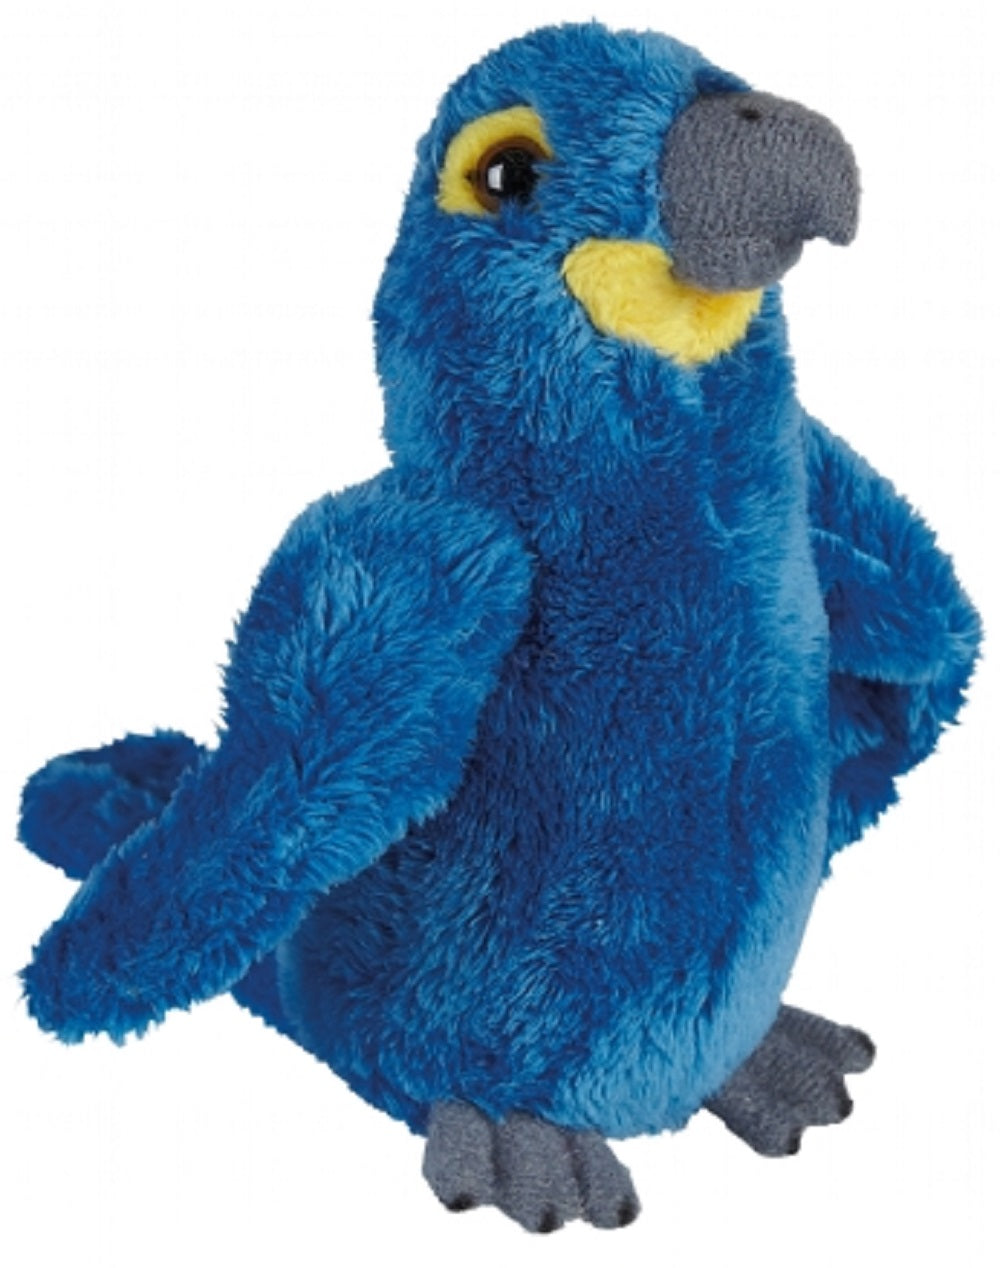 Ravensden Soft Toy Hyacinth Macaw Parrot 15cm